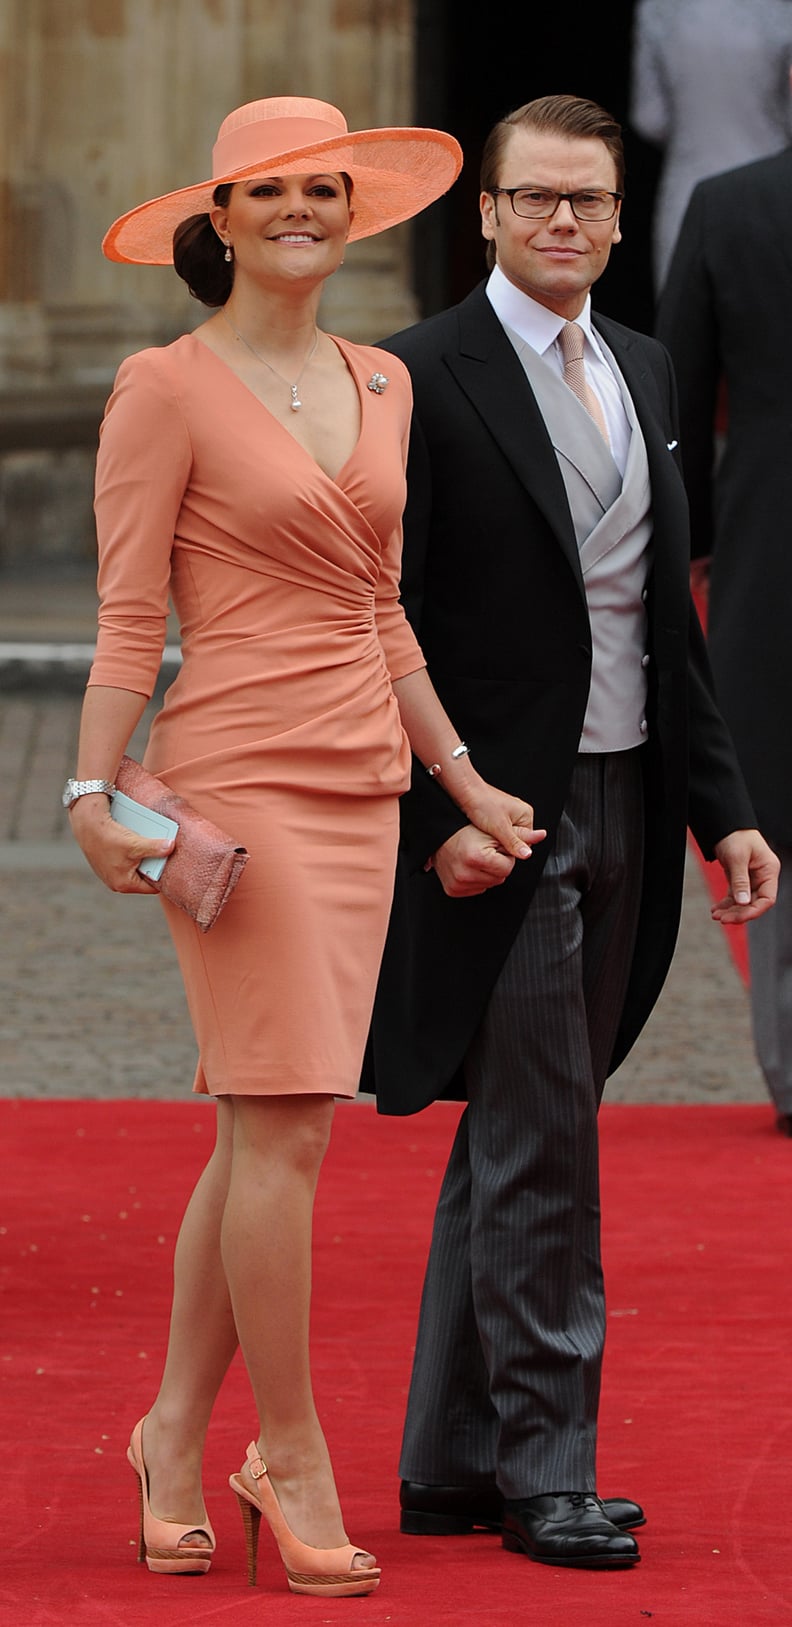 Princess Victoria Can Make a Peach Monochrome Outfit Appear Modern